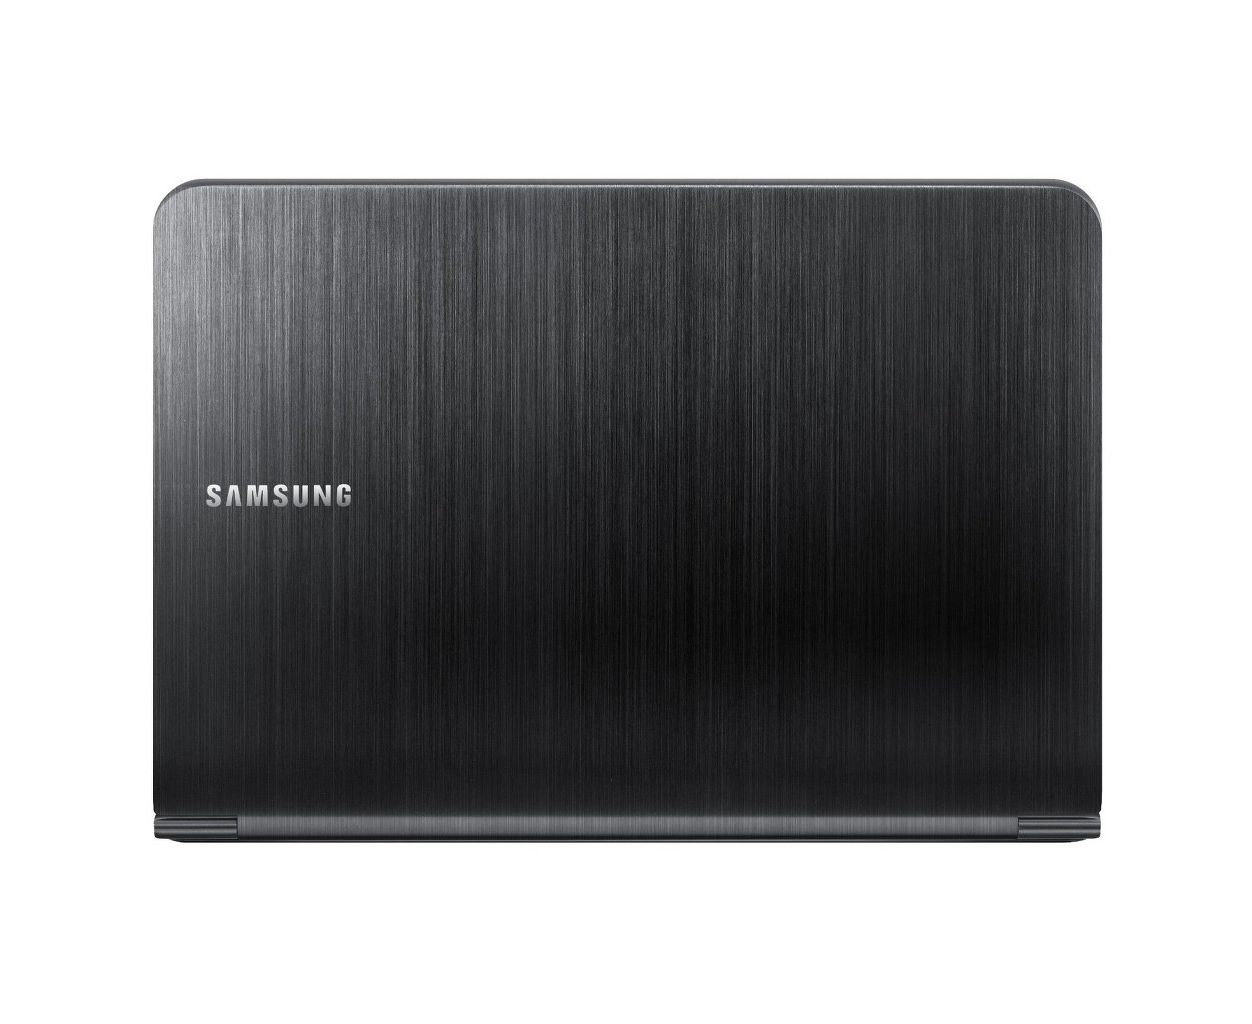 Samsung 9 series. Samsung np900. Ноутбук Samsung 900x. Ноутбук самсунг np900x1a-a01. Samsung np900x3a.